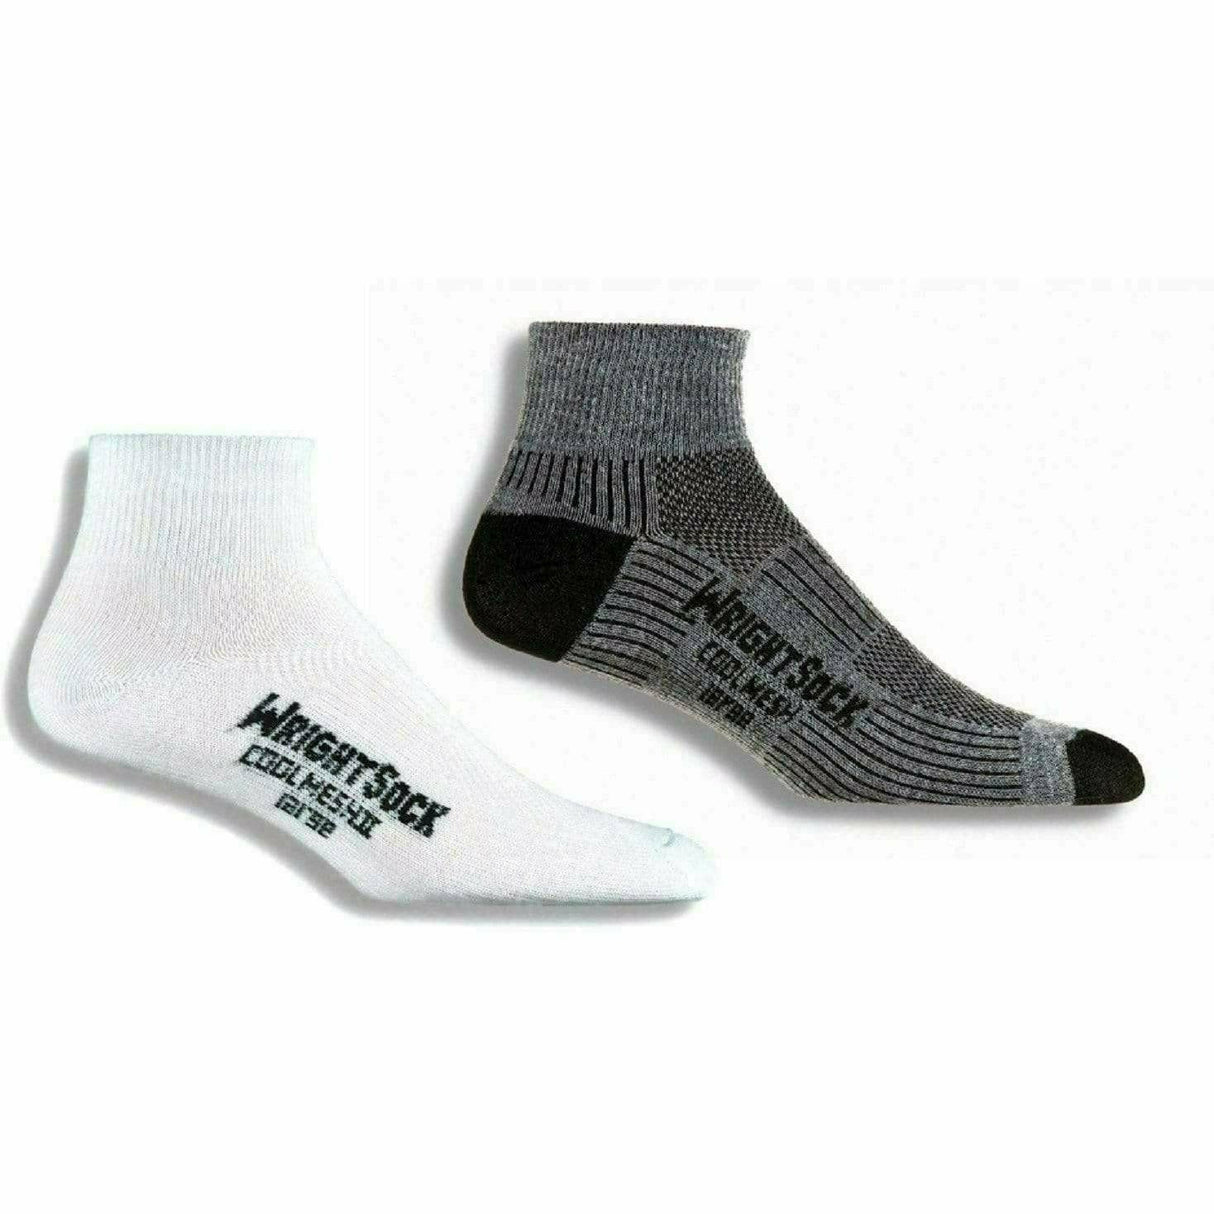 Wrightsock Coolmesh II Quarter Socks  -  Small / White/Grey / 2-Pair Pack